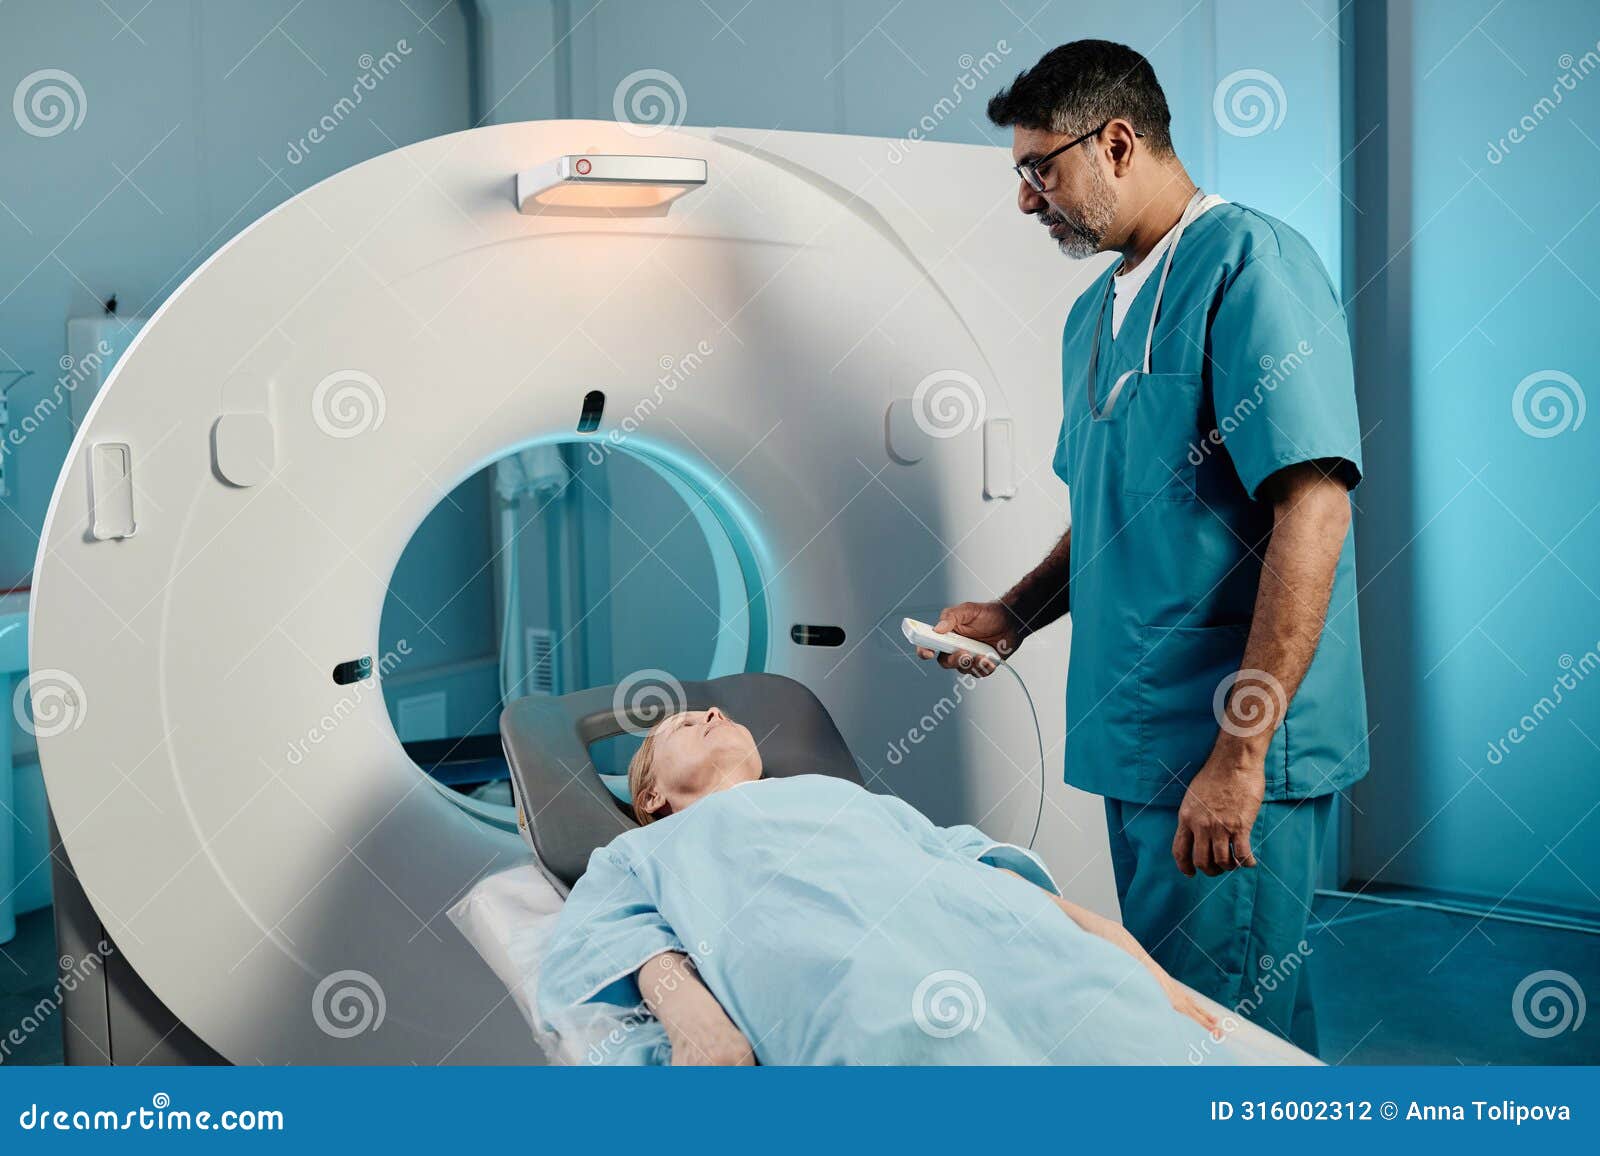 senior woman having ct scan procedure